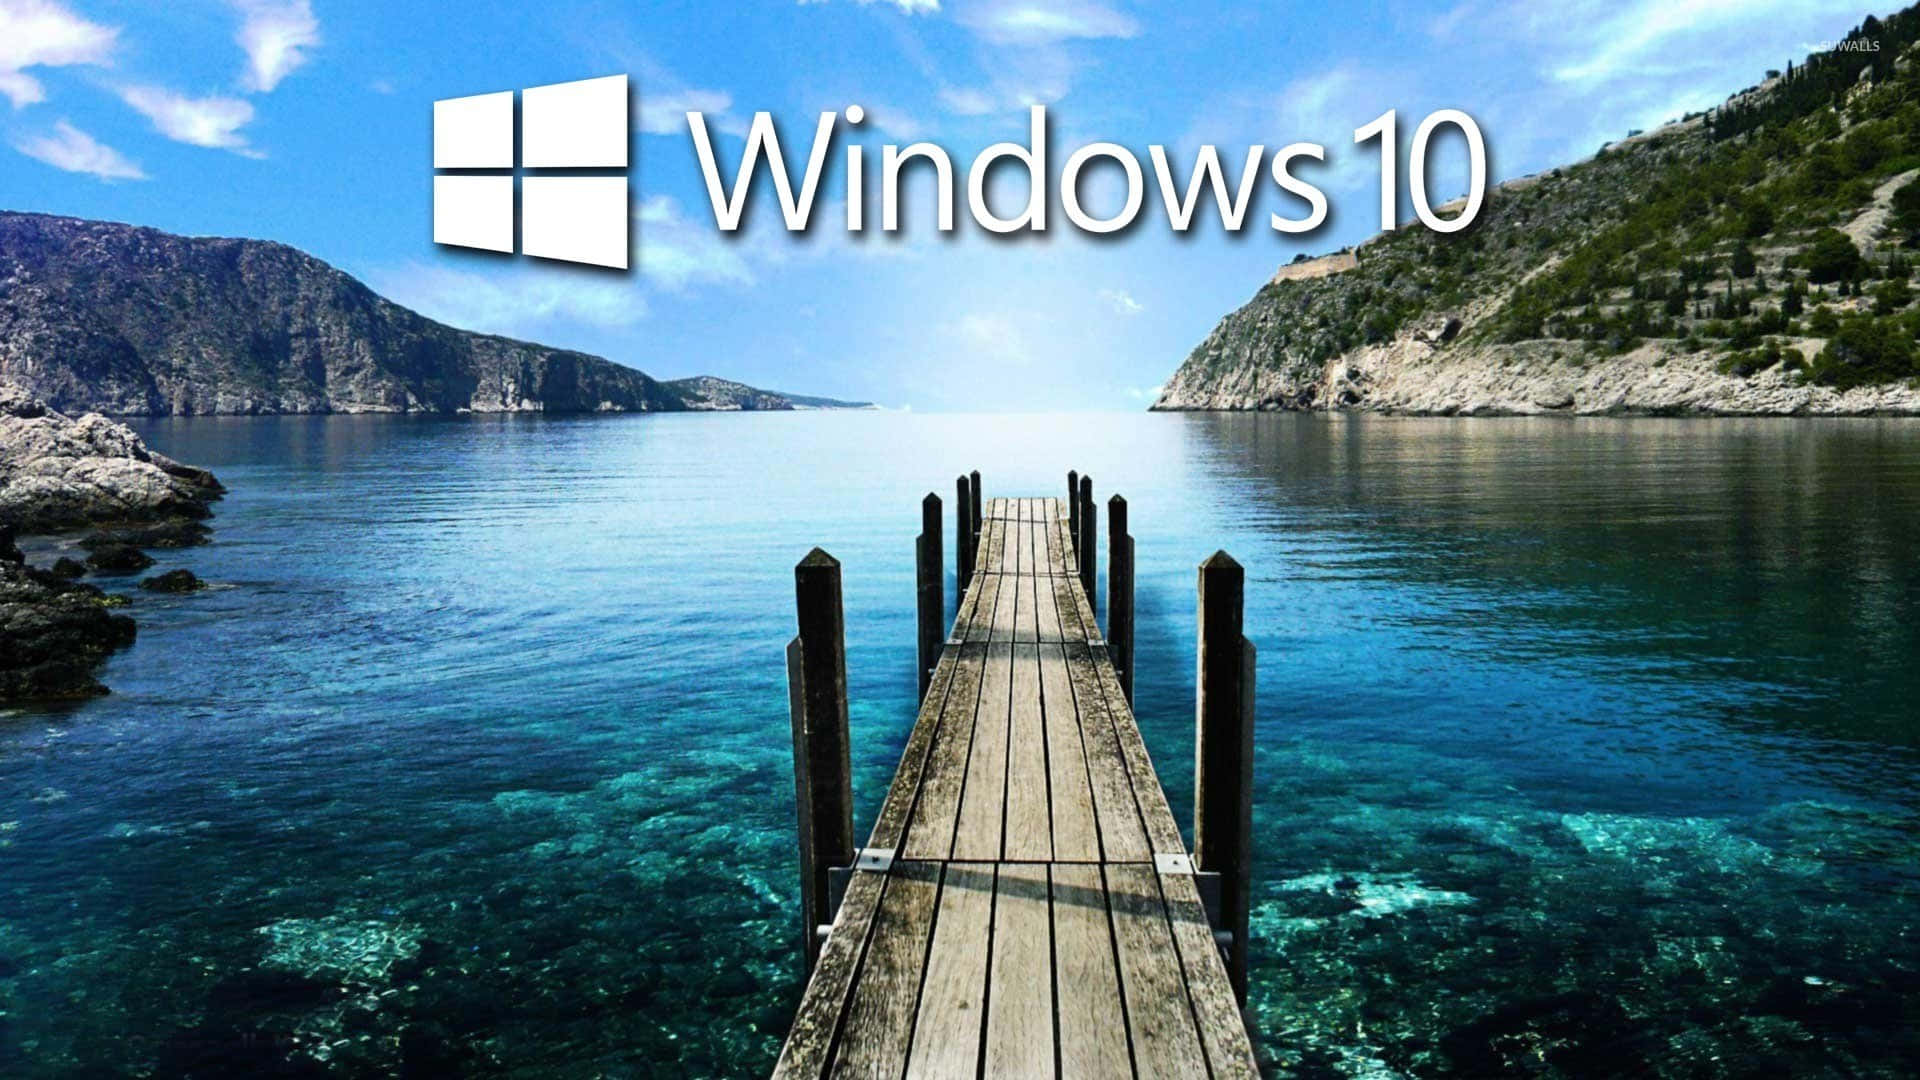 Download windows 10 wallpapers | Wallpapers.com